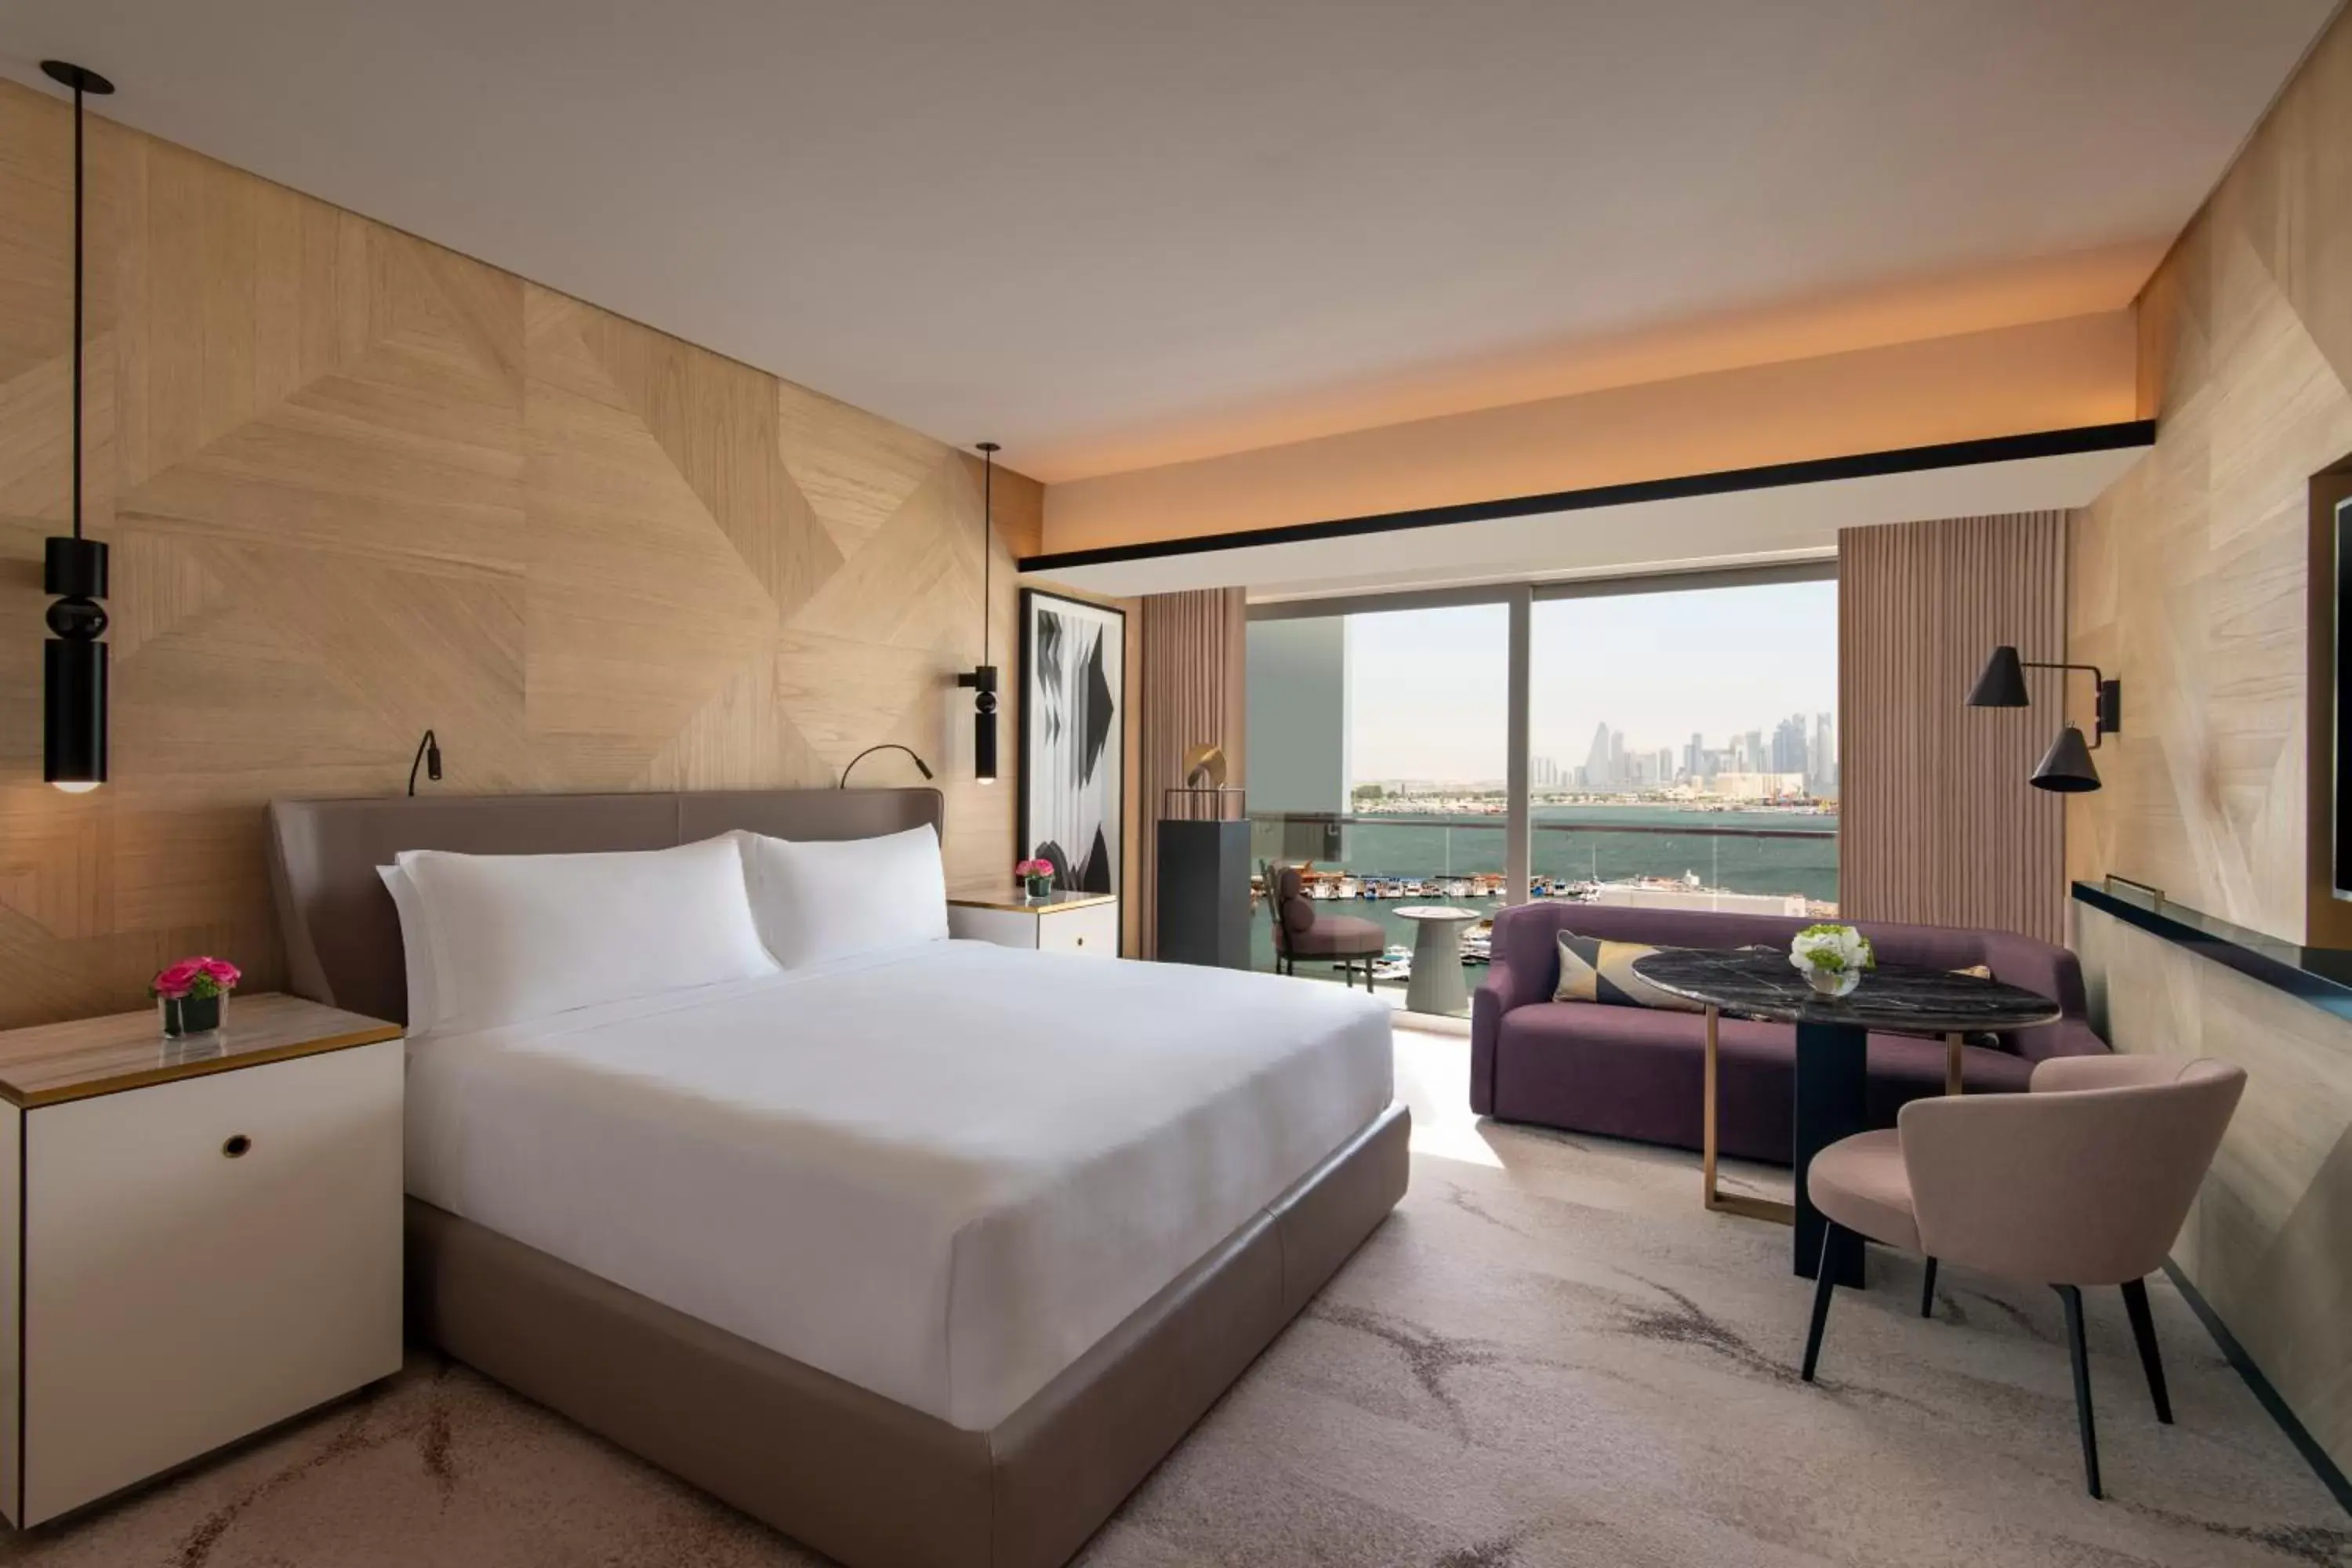 Deluxe Room with Sea View in Rixos Gulf Hotel Doha - All Inclusive